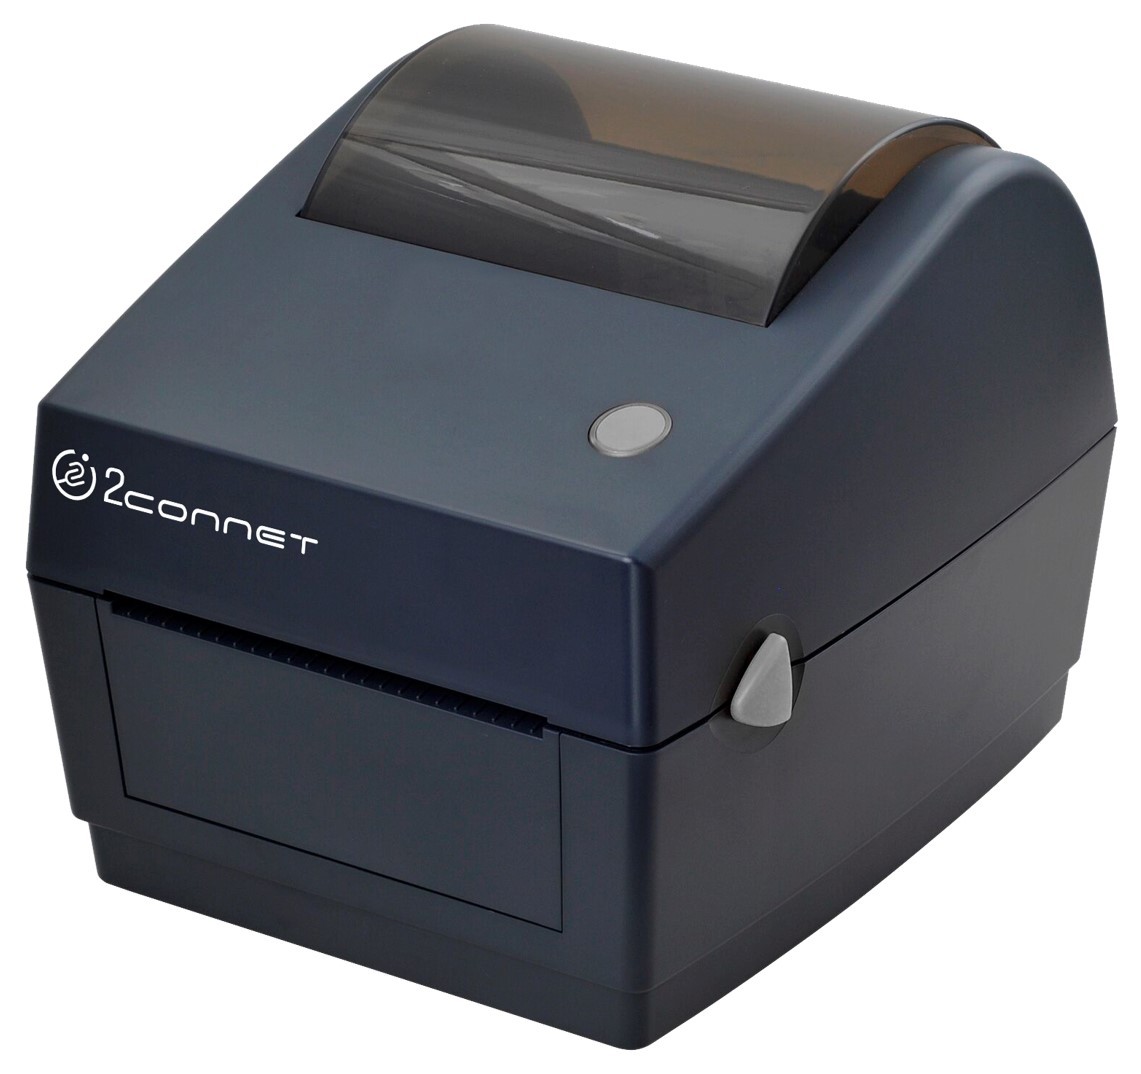 impresoras y scanners - Impresora Térmica de label etiquetas similar a la zebra